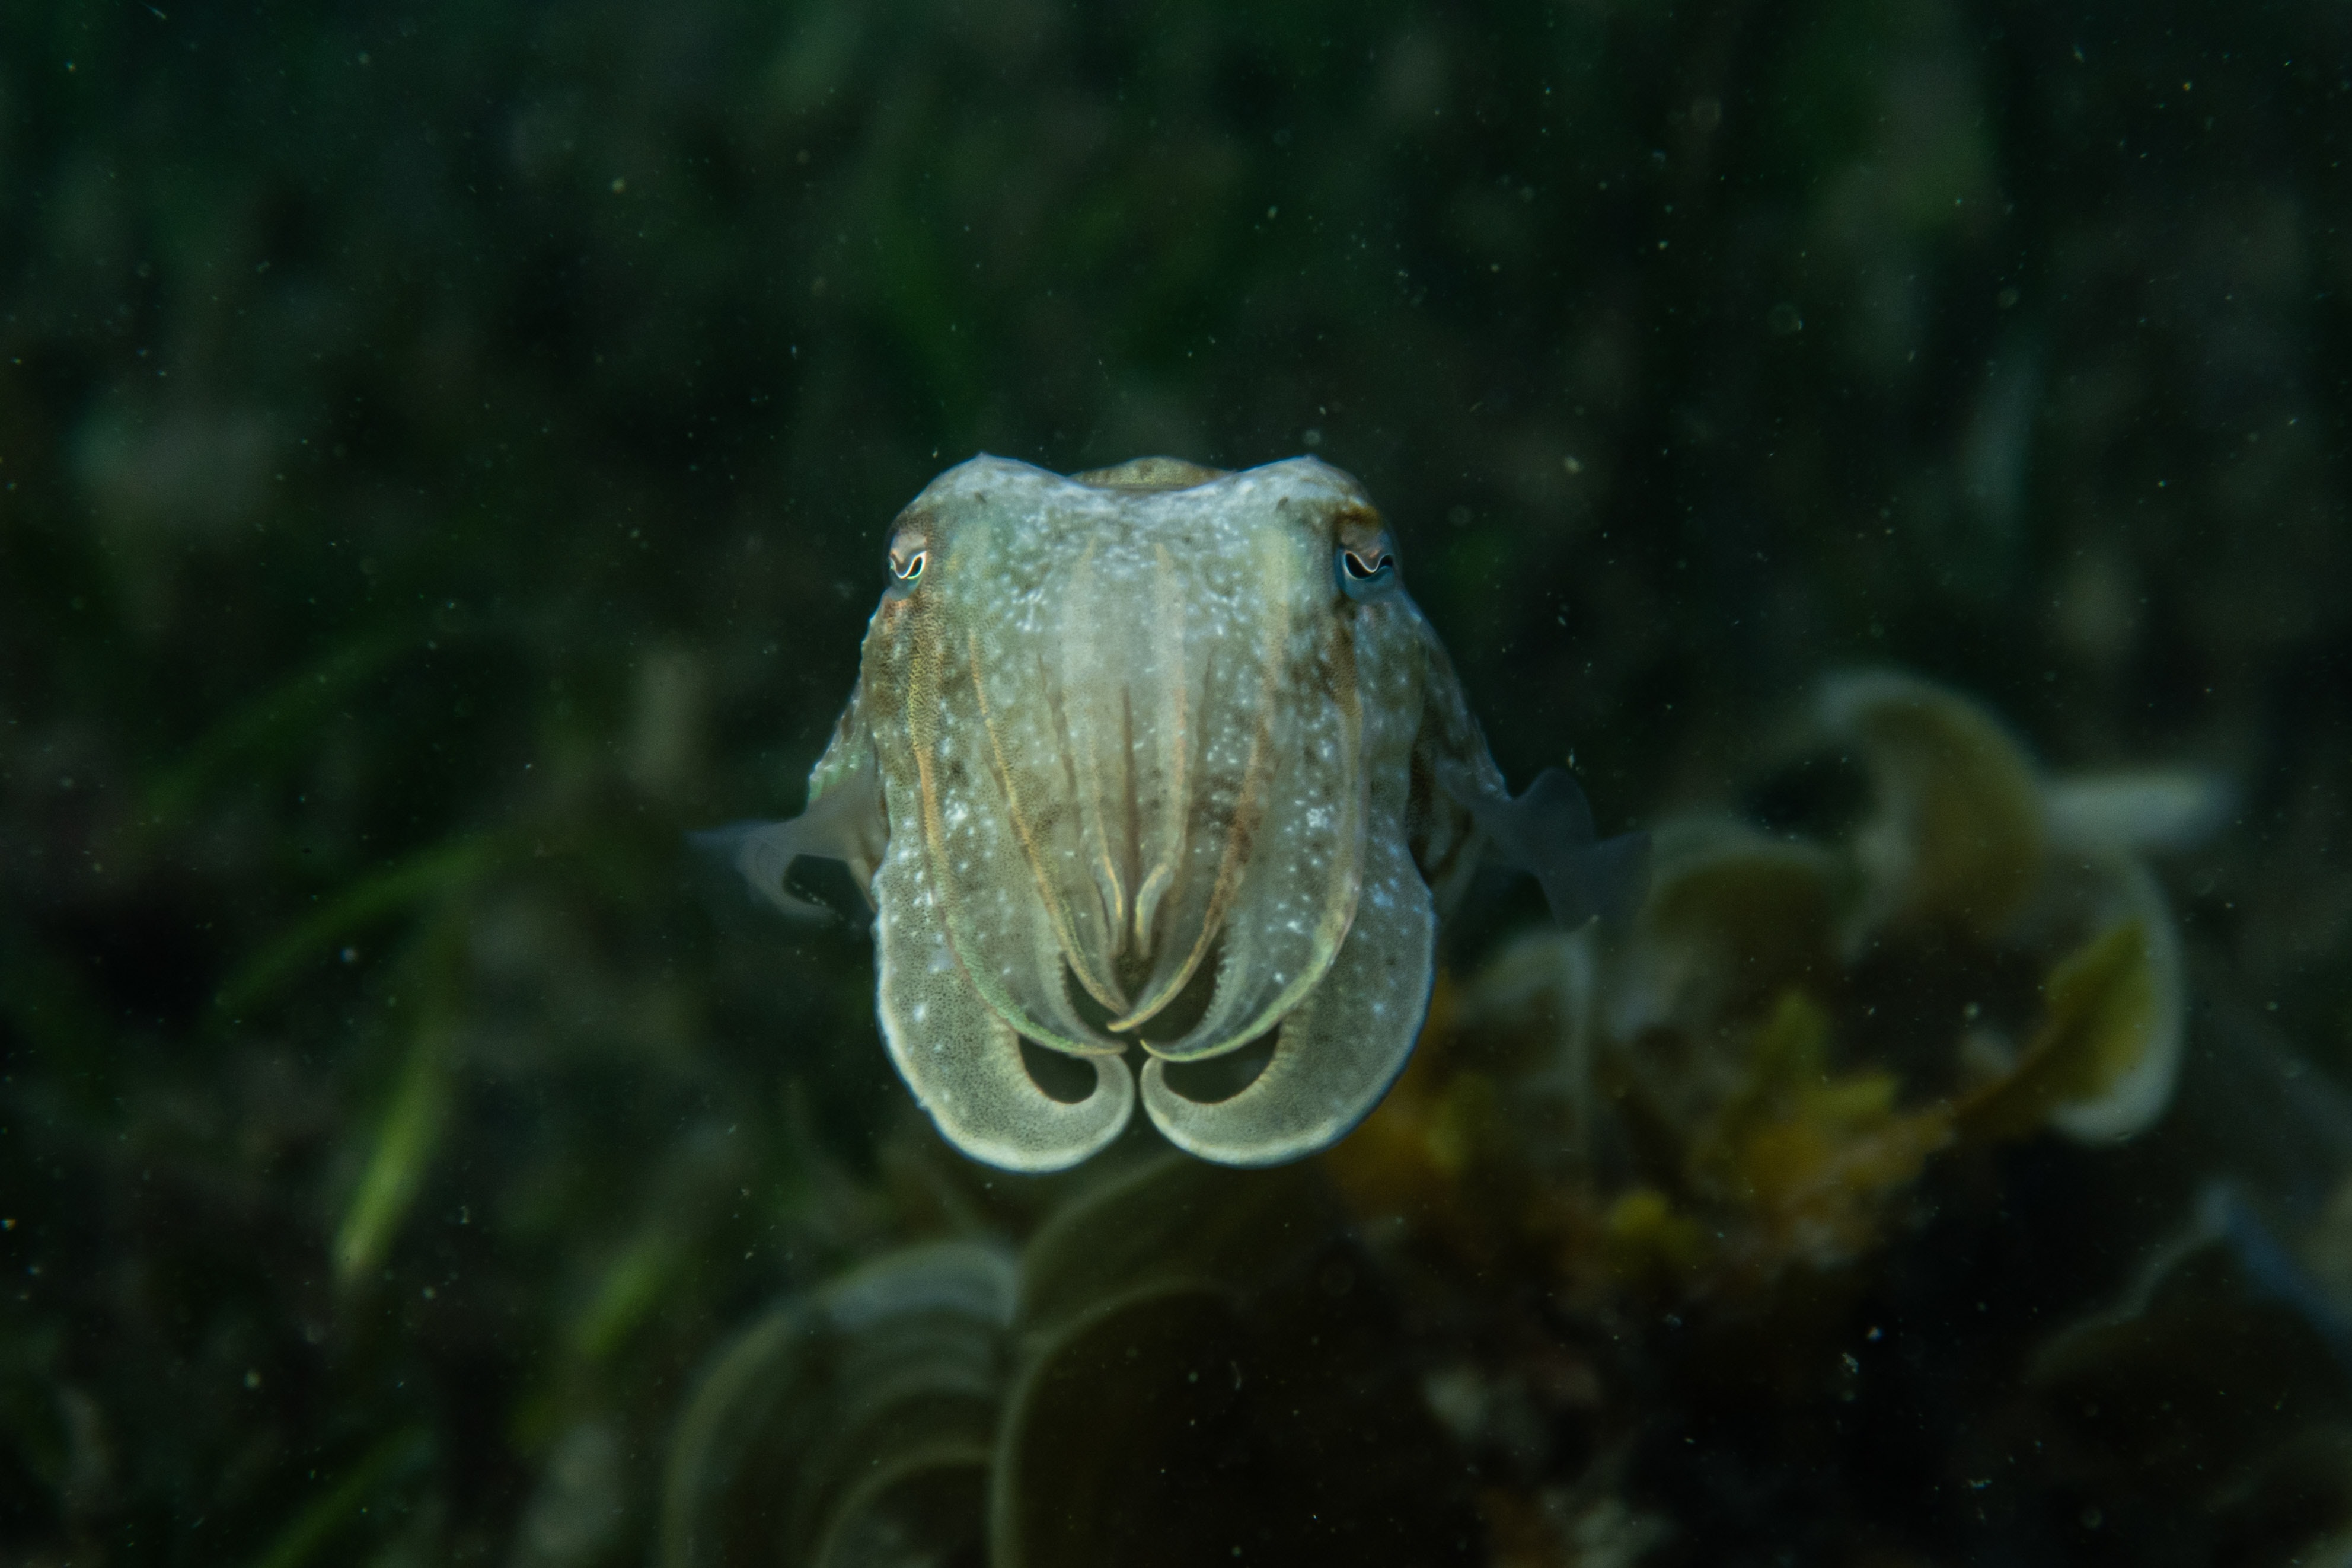 A cuttlefish facing the camera